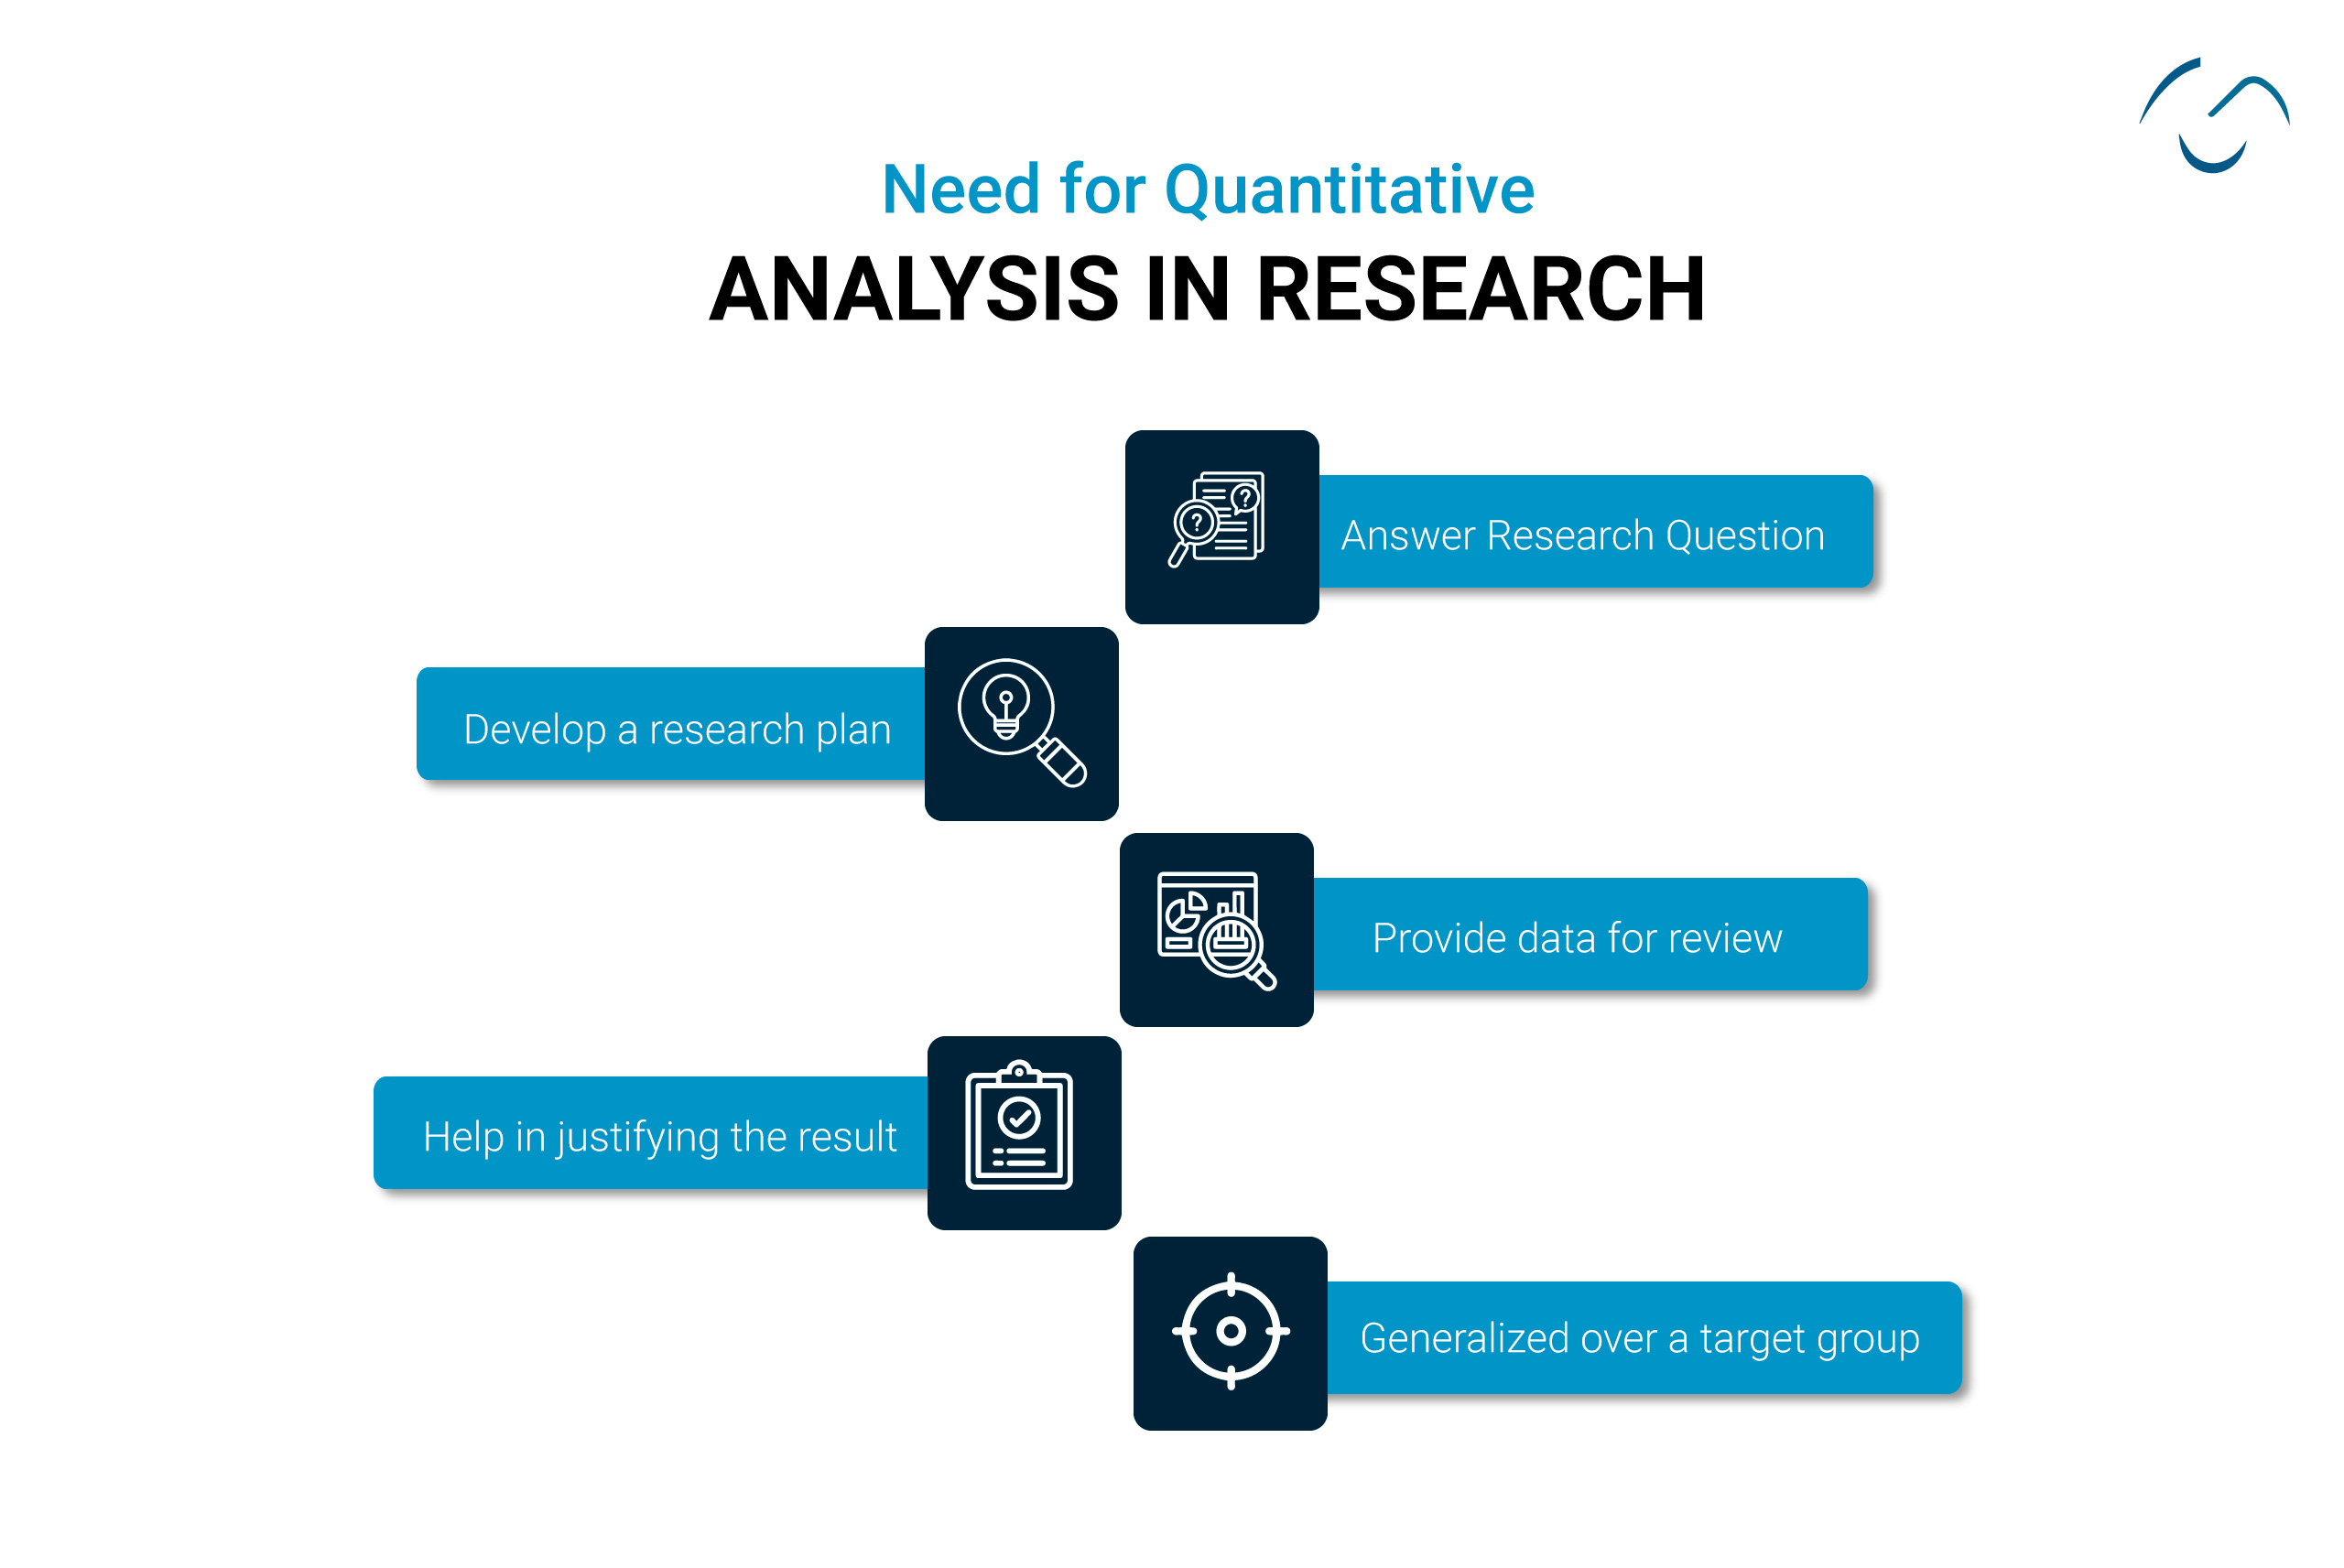 Why need Quantitative analysis